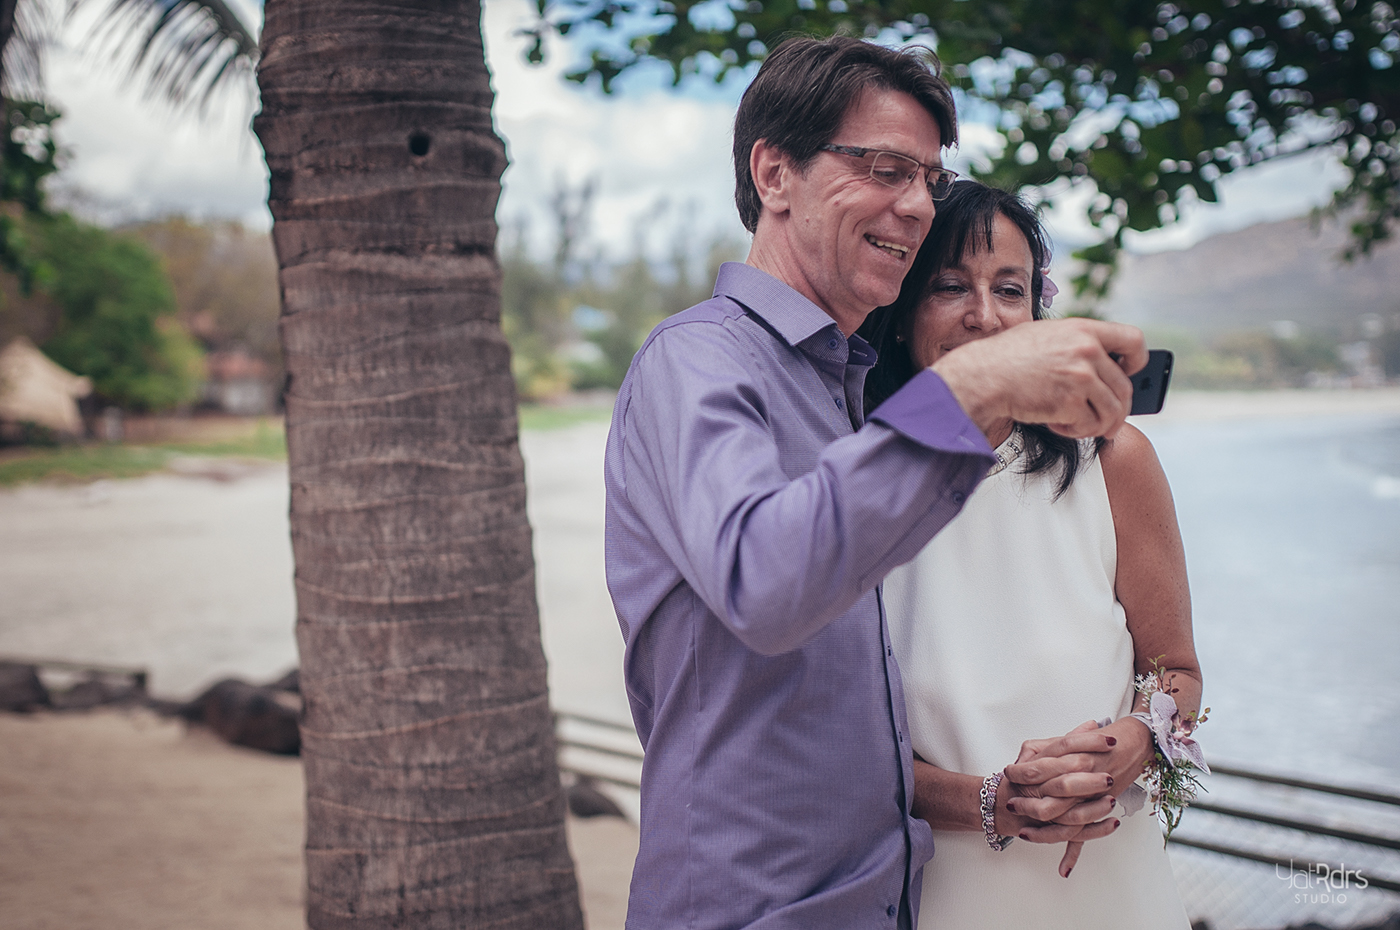 wedding couple mauritius yatrdrs destinationwedding germancouple Love hotel WeddingPhotographer Nikon